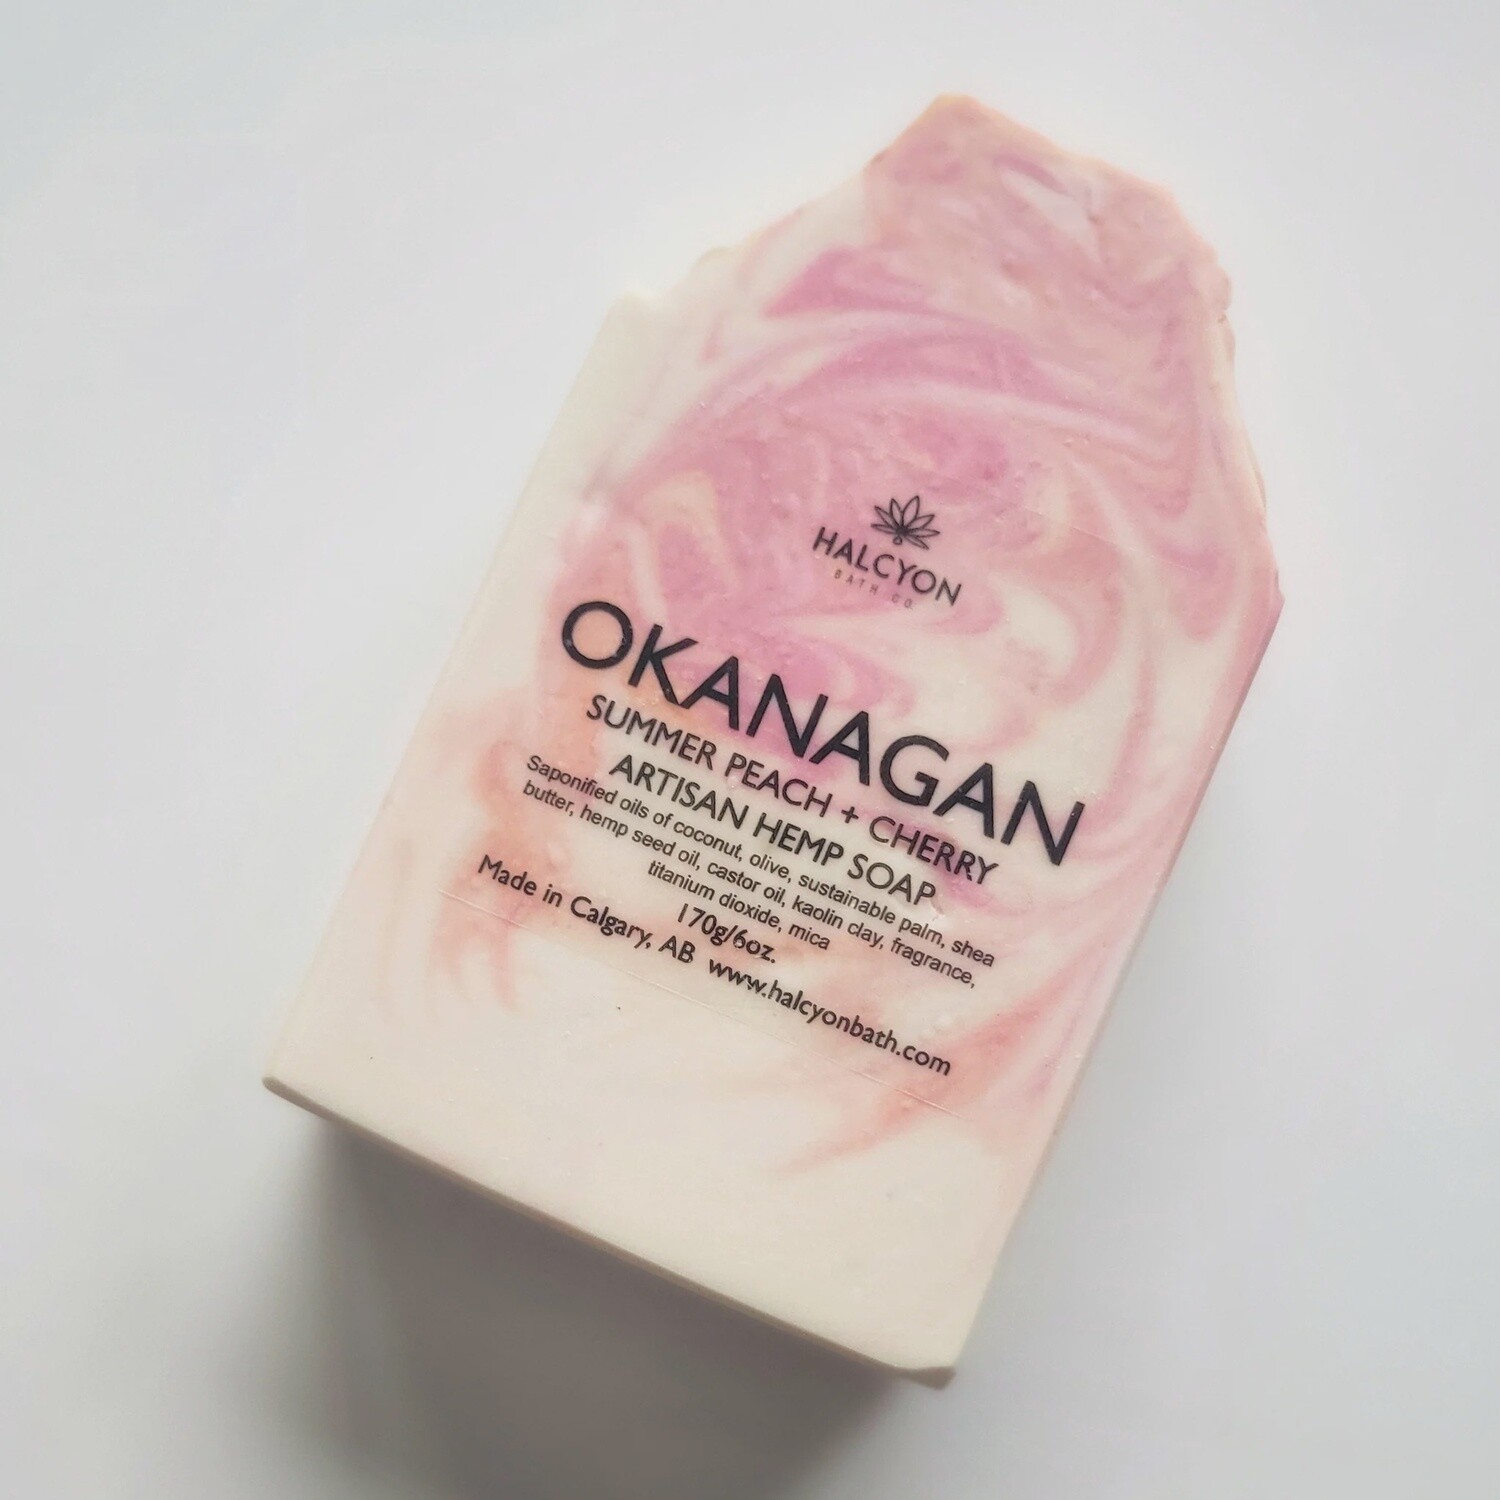 "Okanagan" Summer Peach + Cherry Hemp Soap